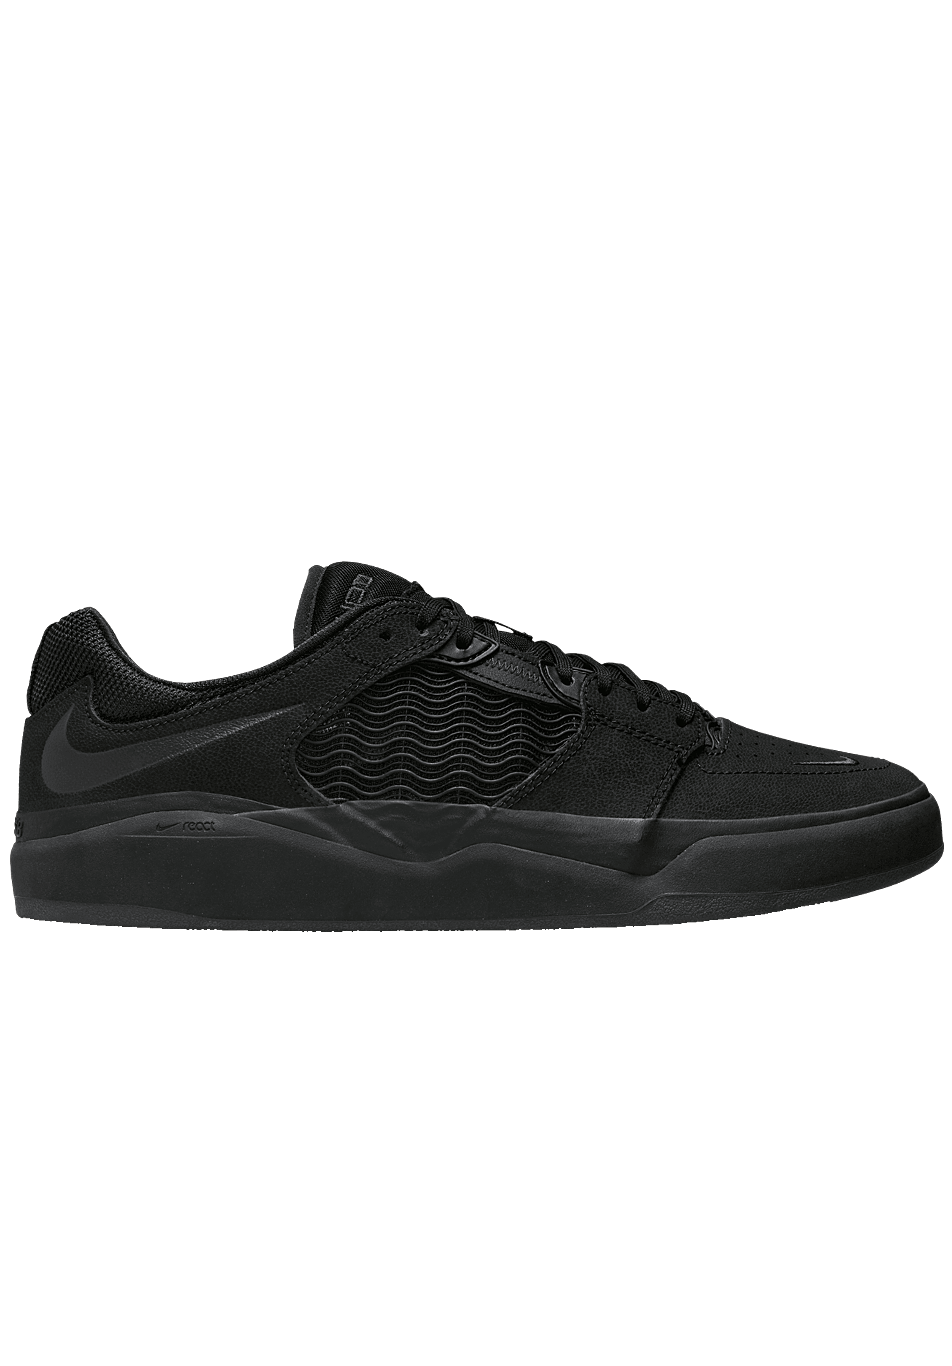 Nike SB Ishod Premium Shoe Tripple Black ONLINE ONLY